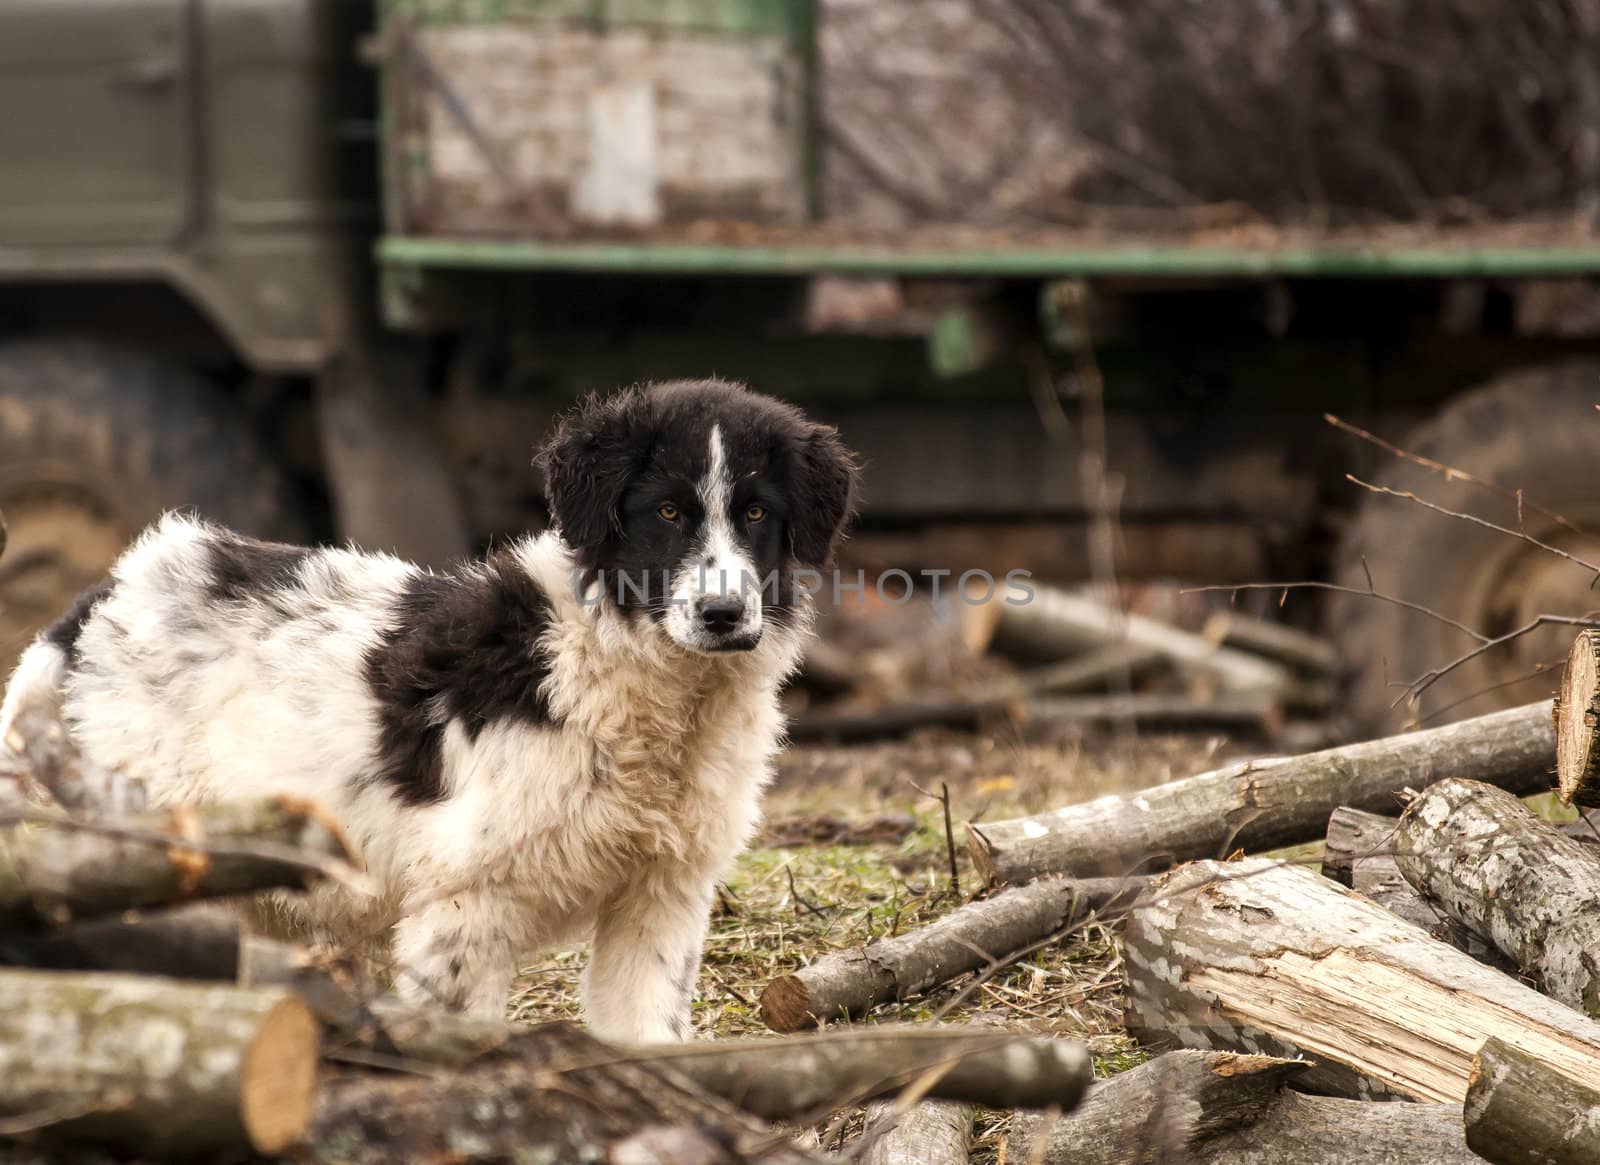 Young sheepdog by varbenov